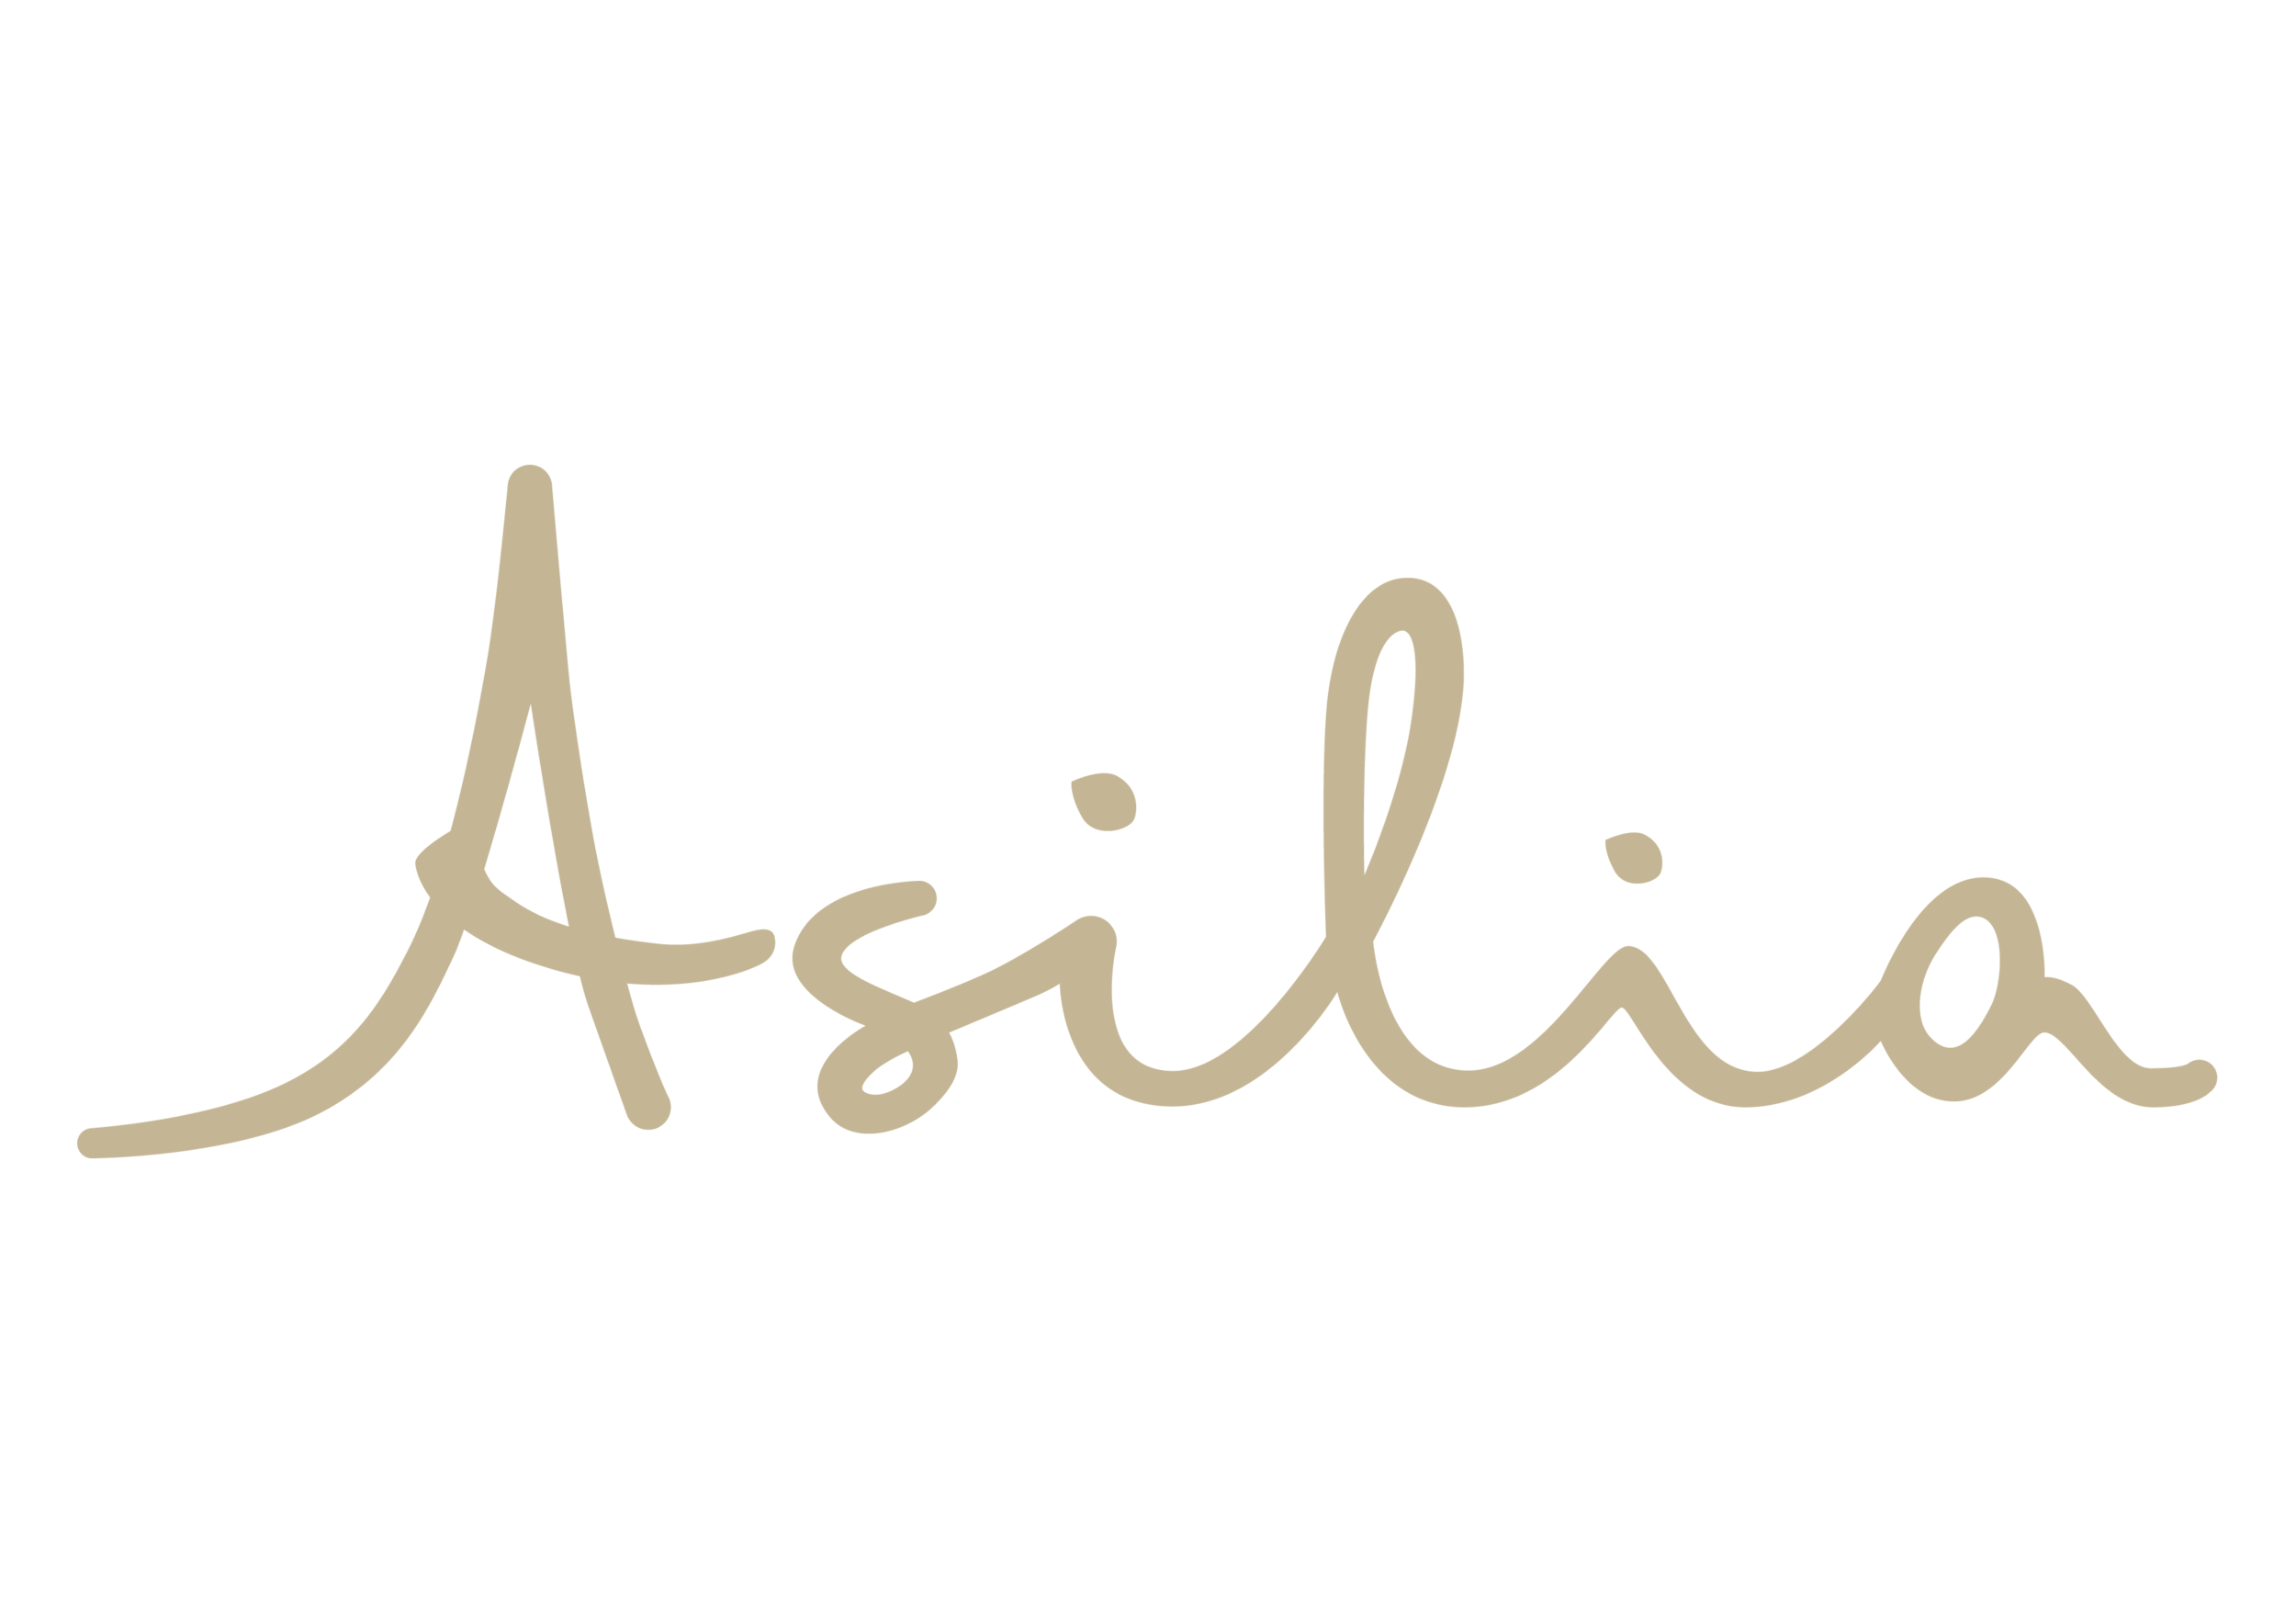 Asilia - Logo 09-18 - No Payoff Khaki.png